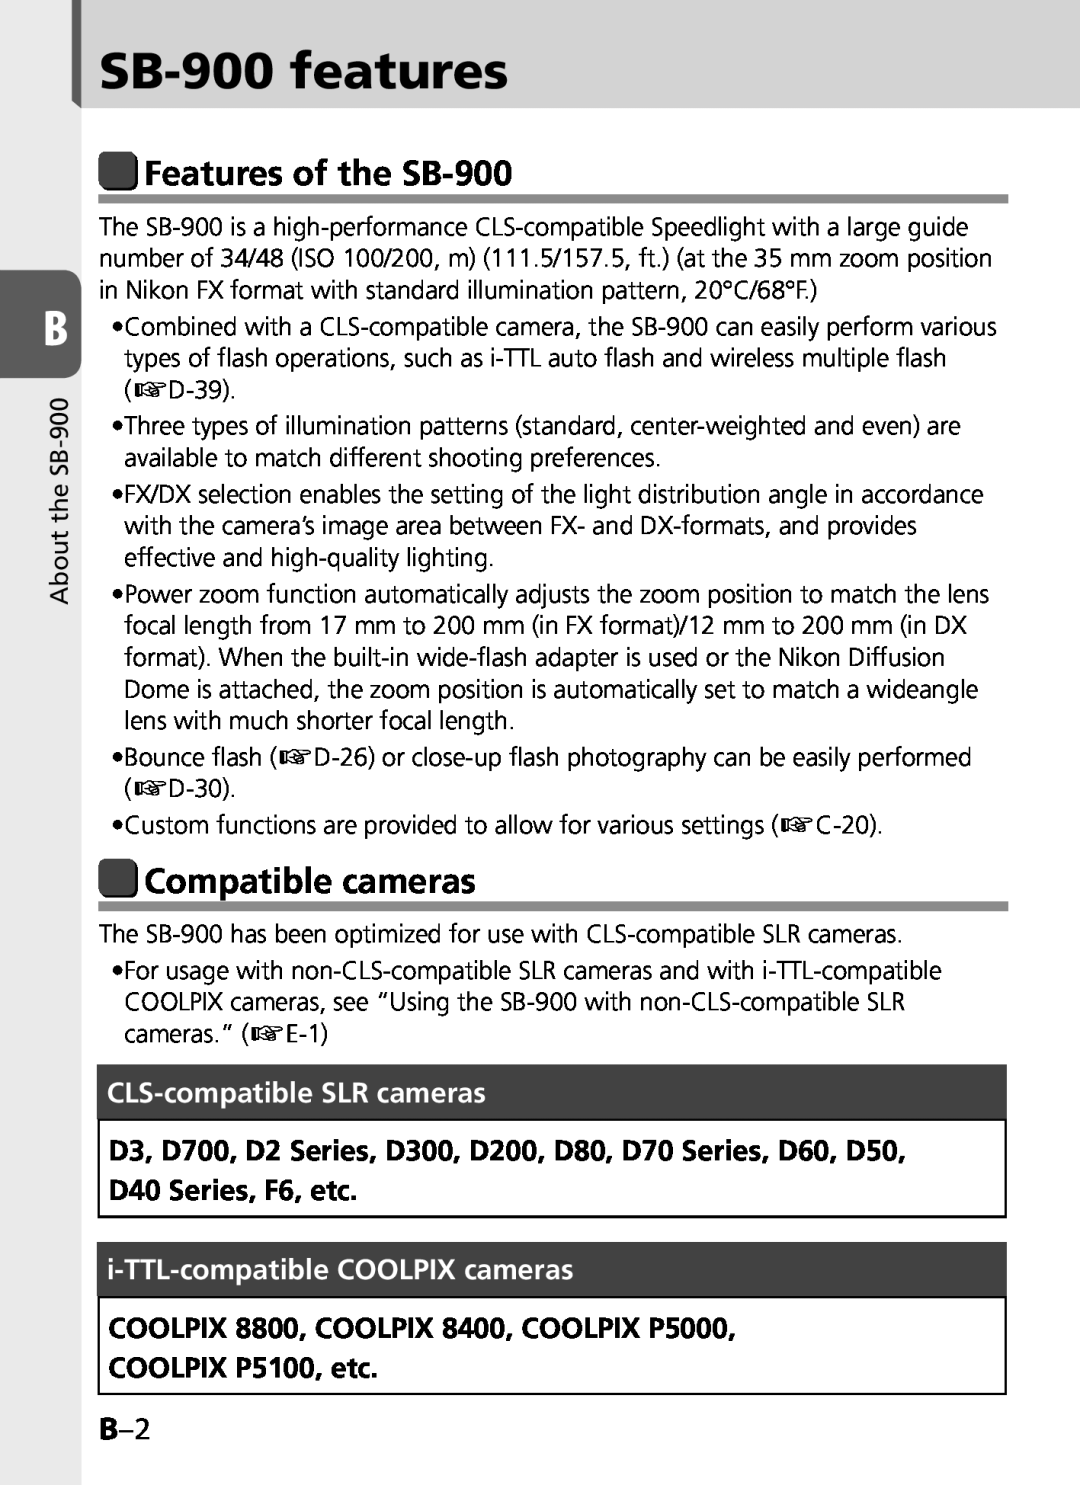 Univex user manual SB-900features, Features of the SB-900, Compatible cameras, COOLPIX 8800, COOLPIX 8400, COOLPIX P5000 